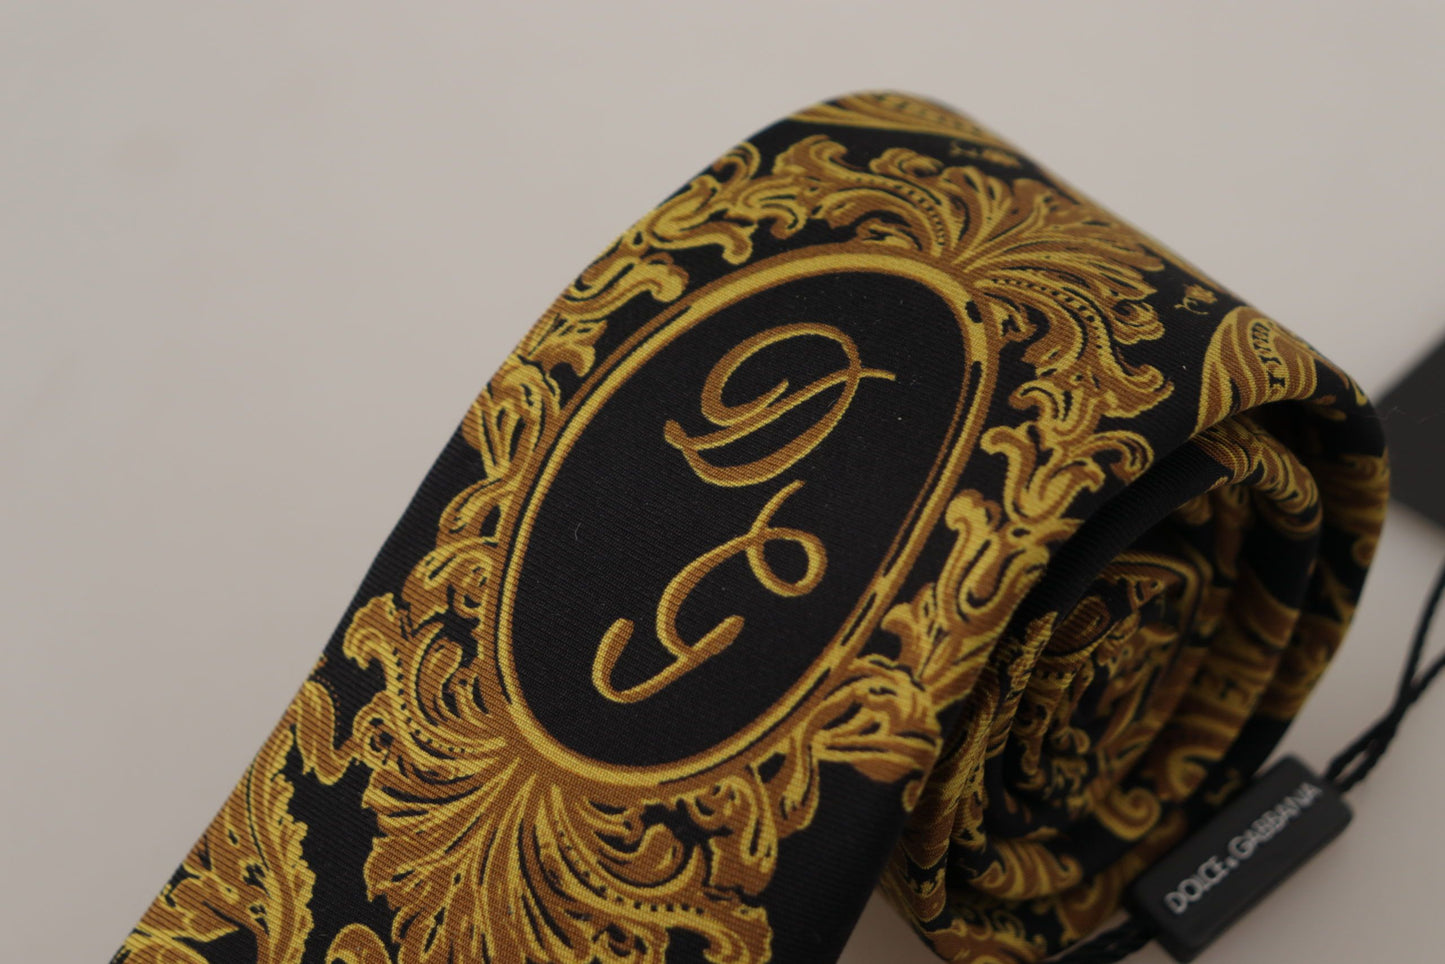 Elegant Gold Silk Tie